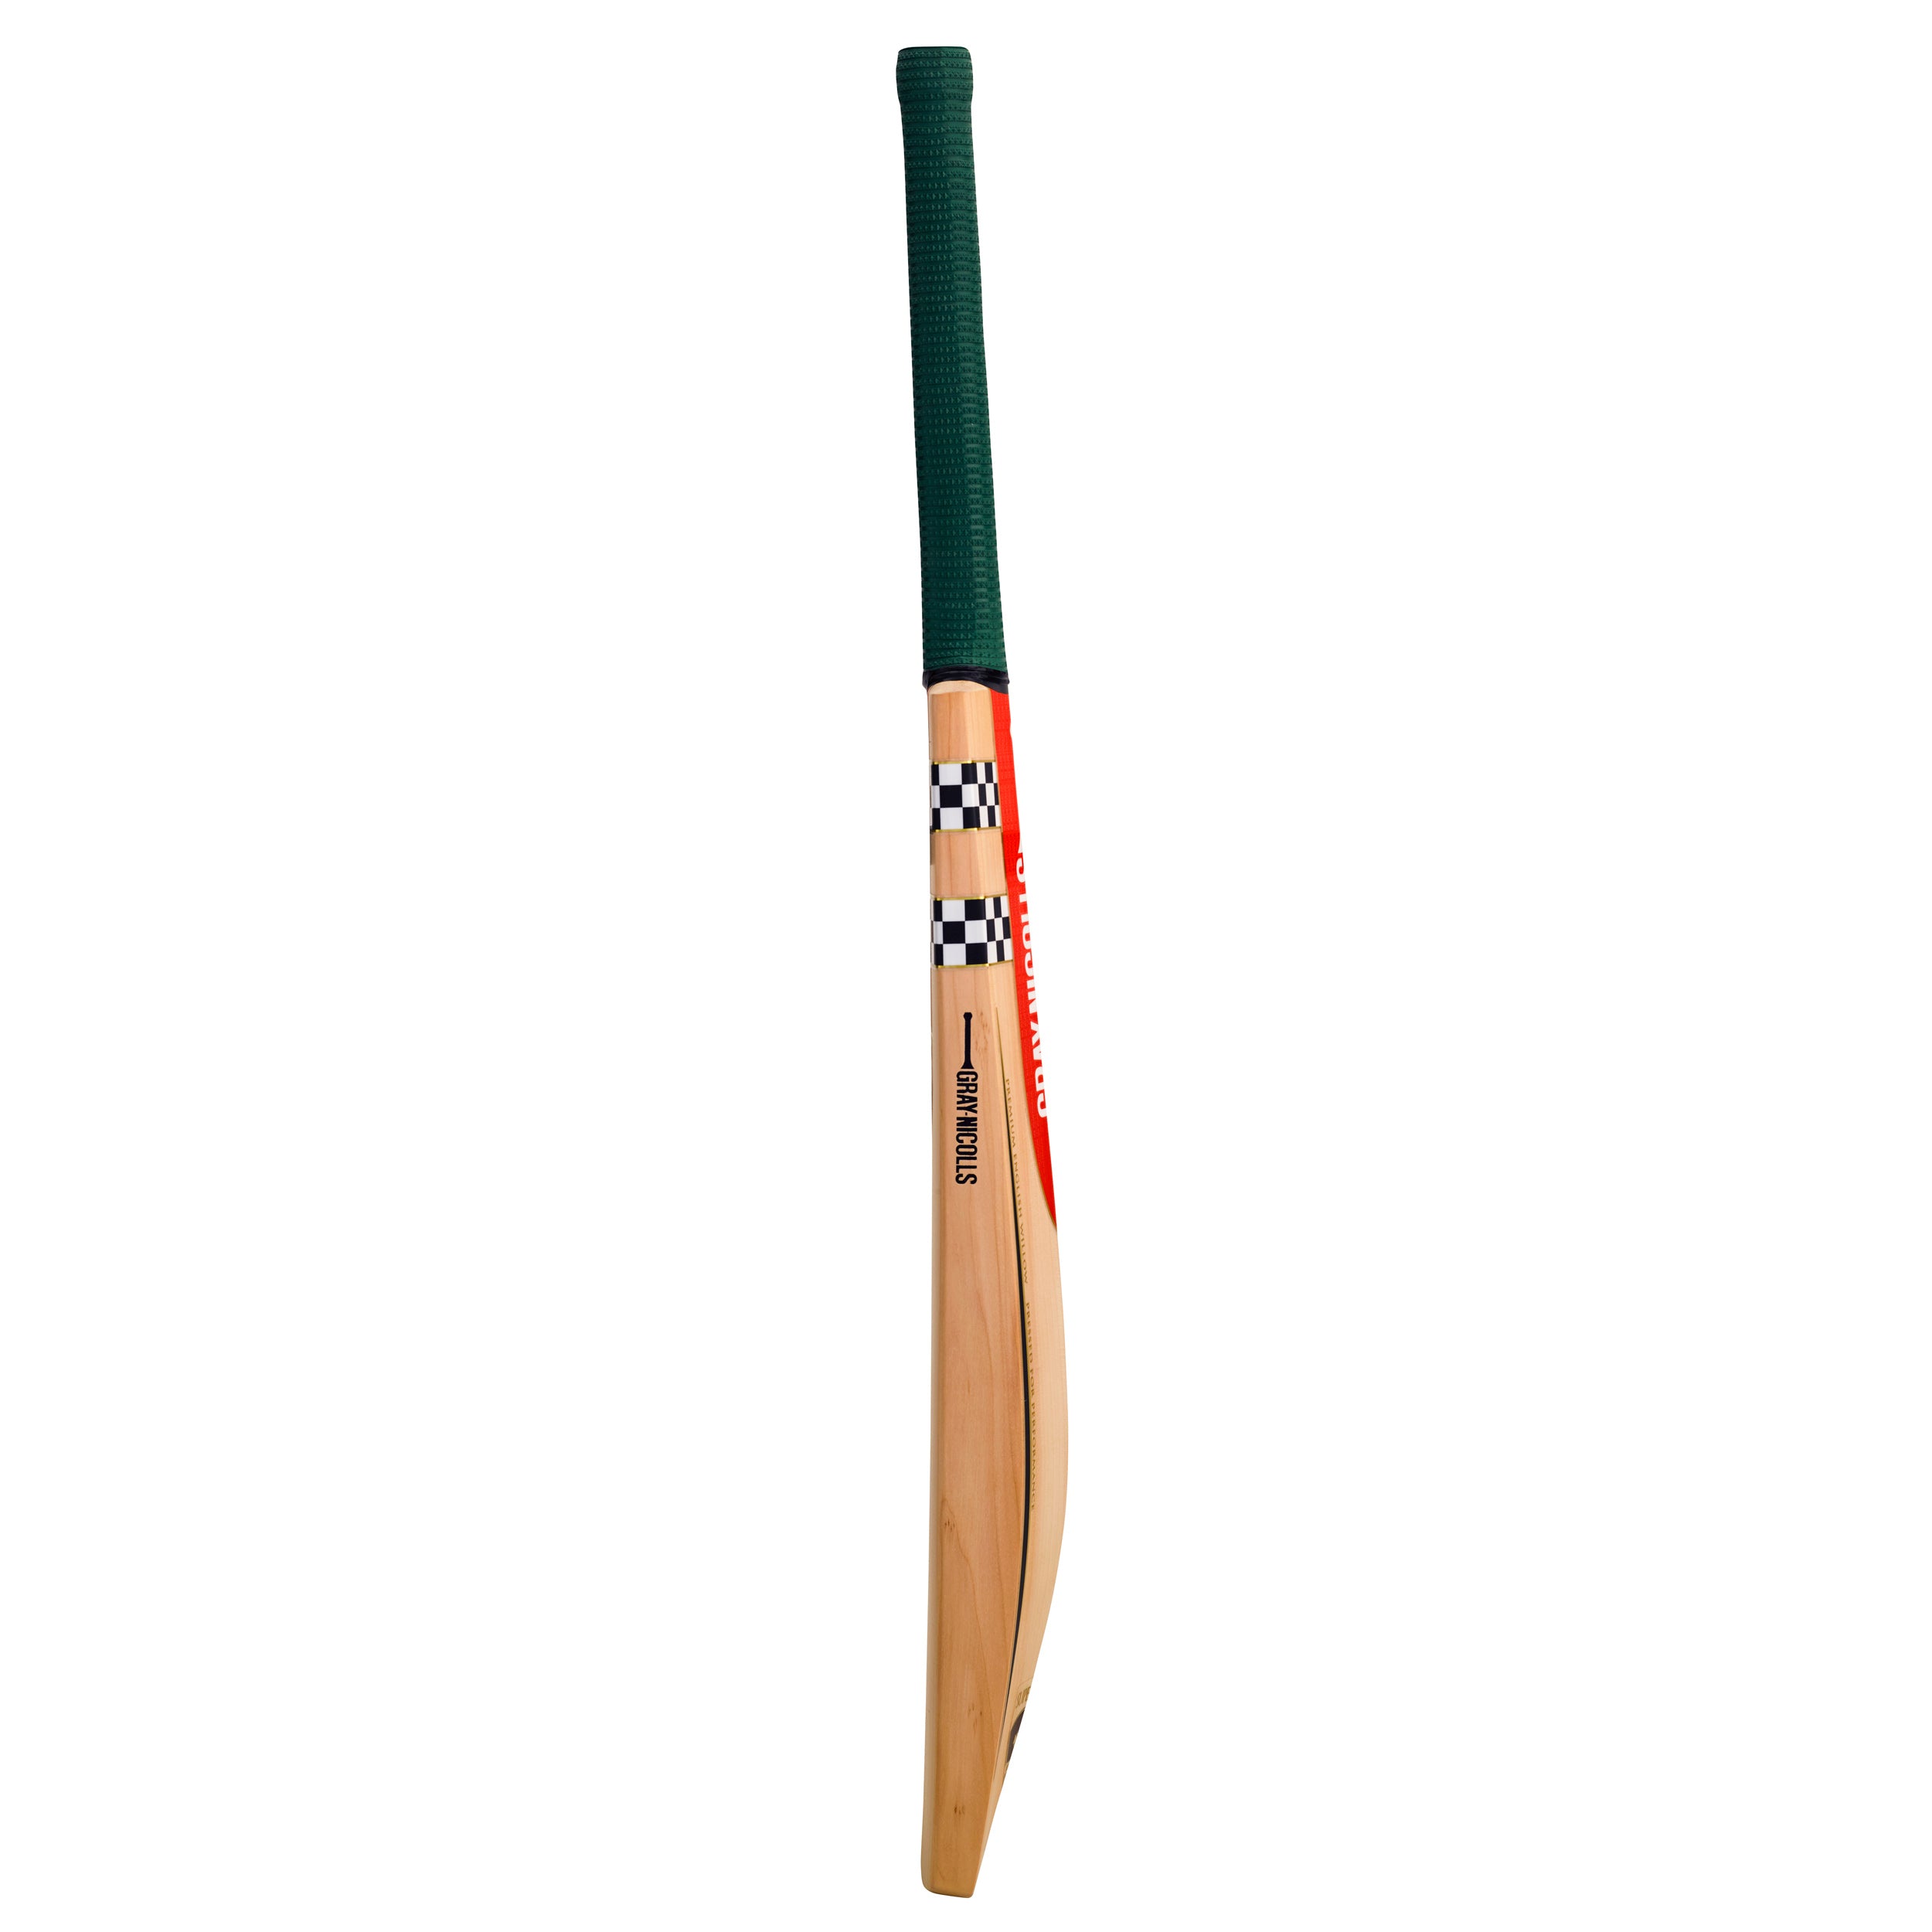 Gray-Nicolls Superbow Handcrafted Senior Cricket Bat